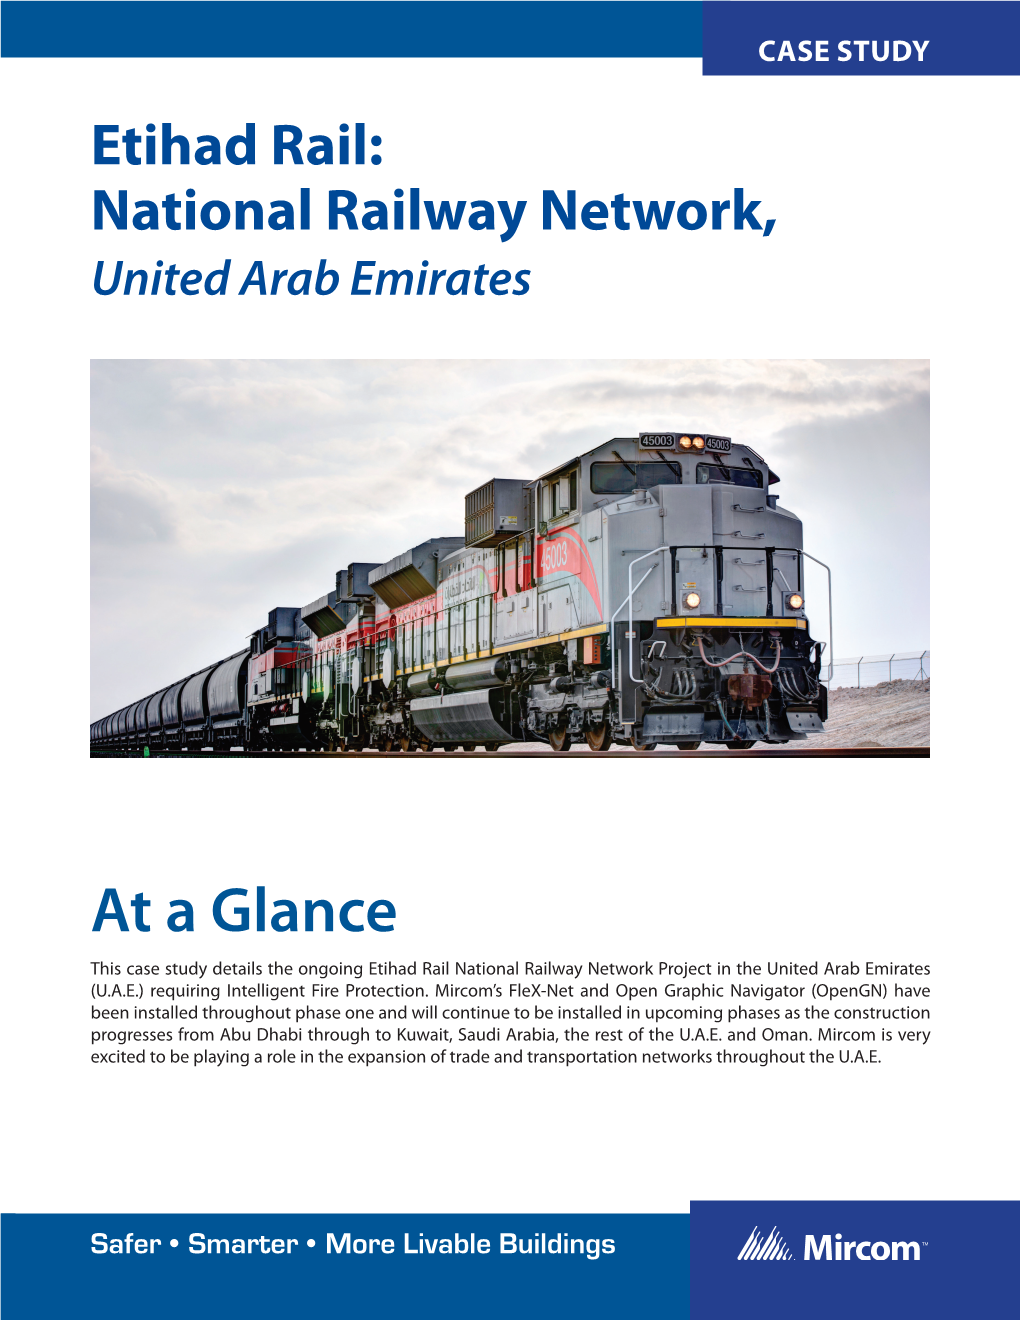 Etihad Rail: National Railway Network, United Arab Emirates